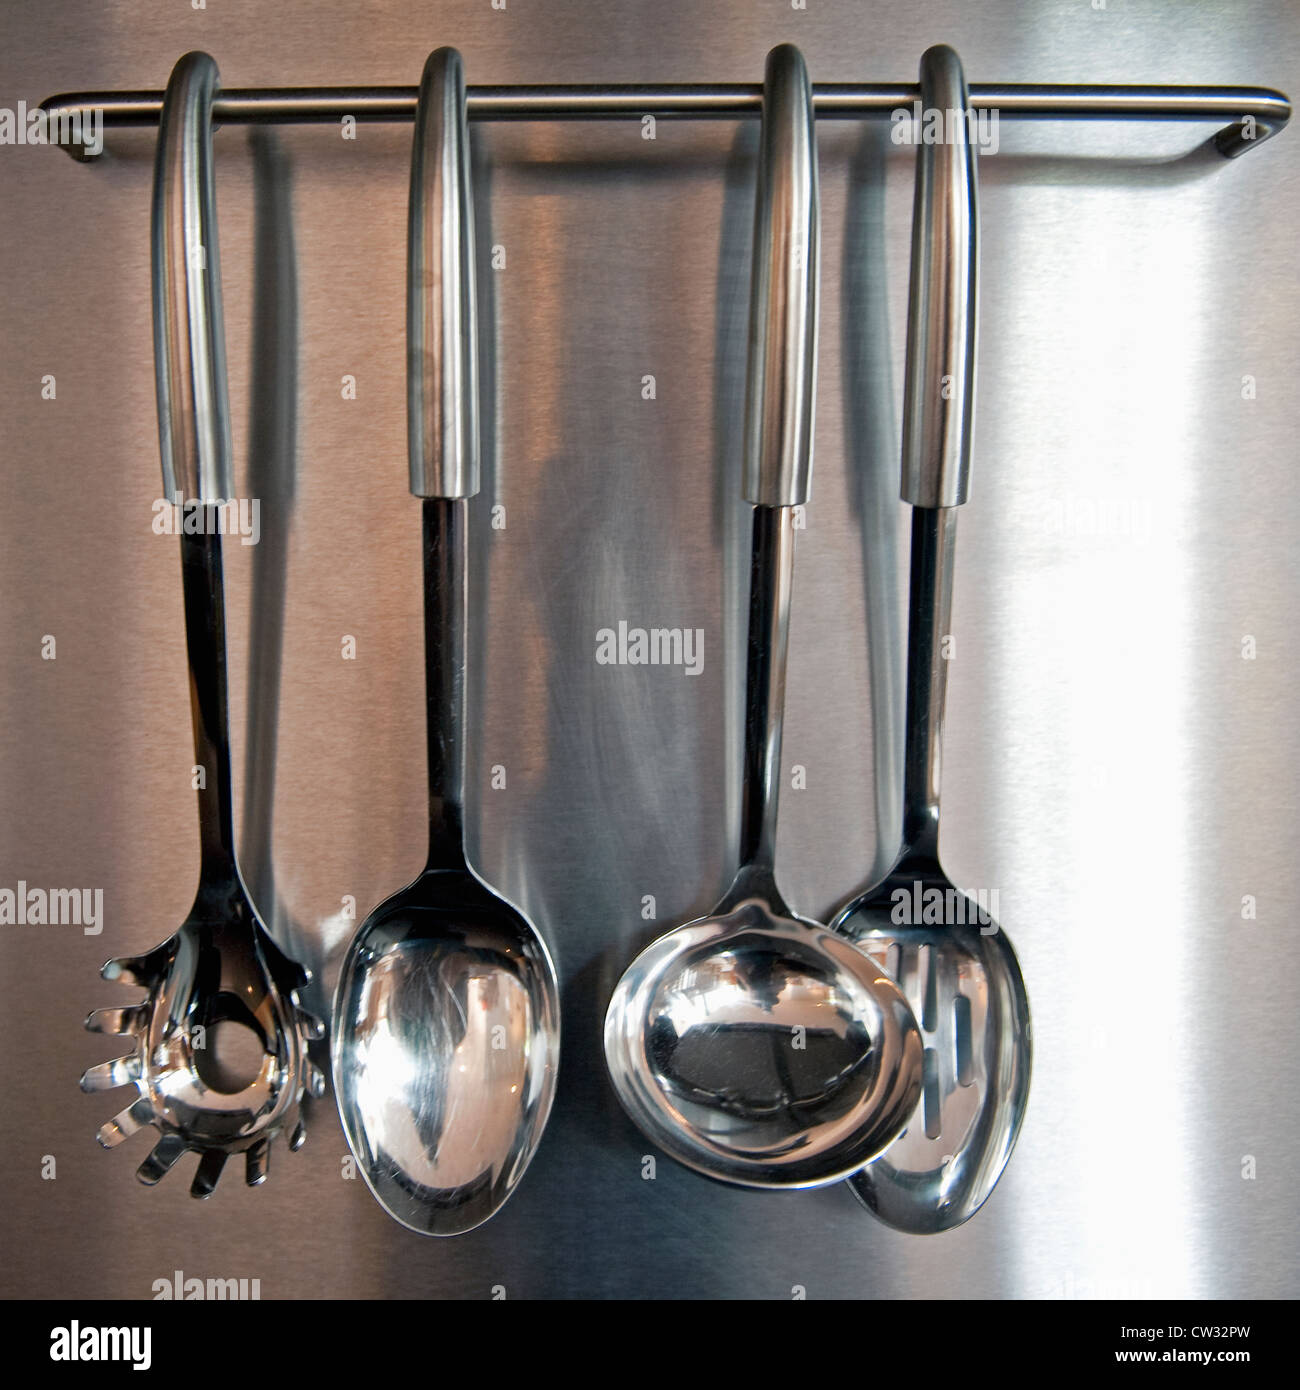 Four kitchen utensils hanging. Stock Photo